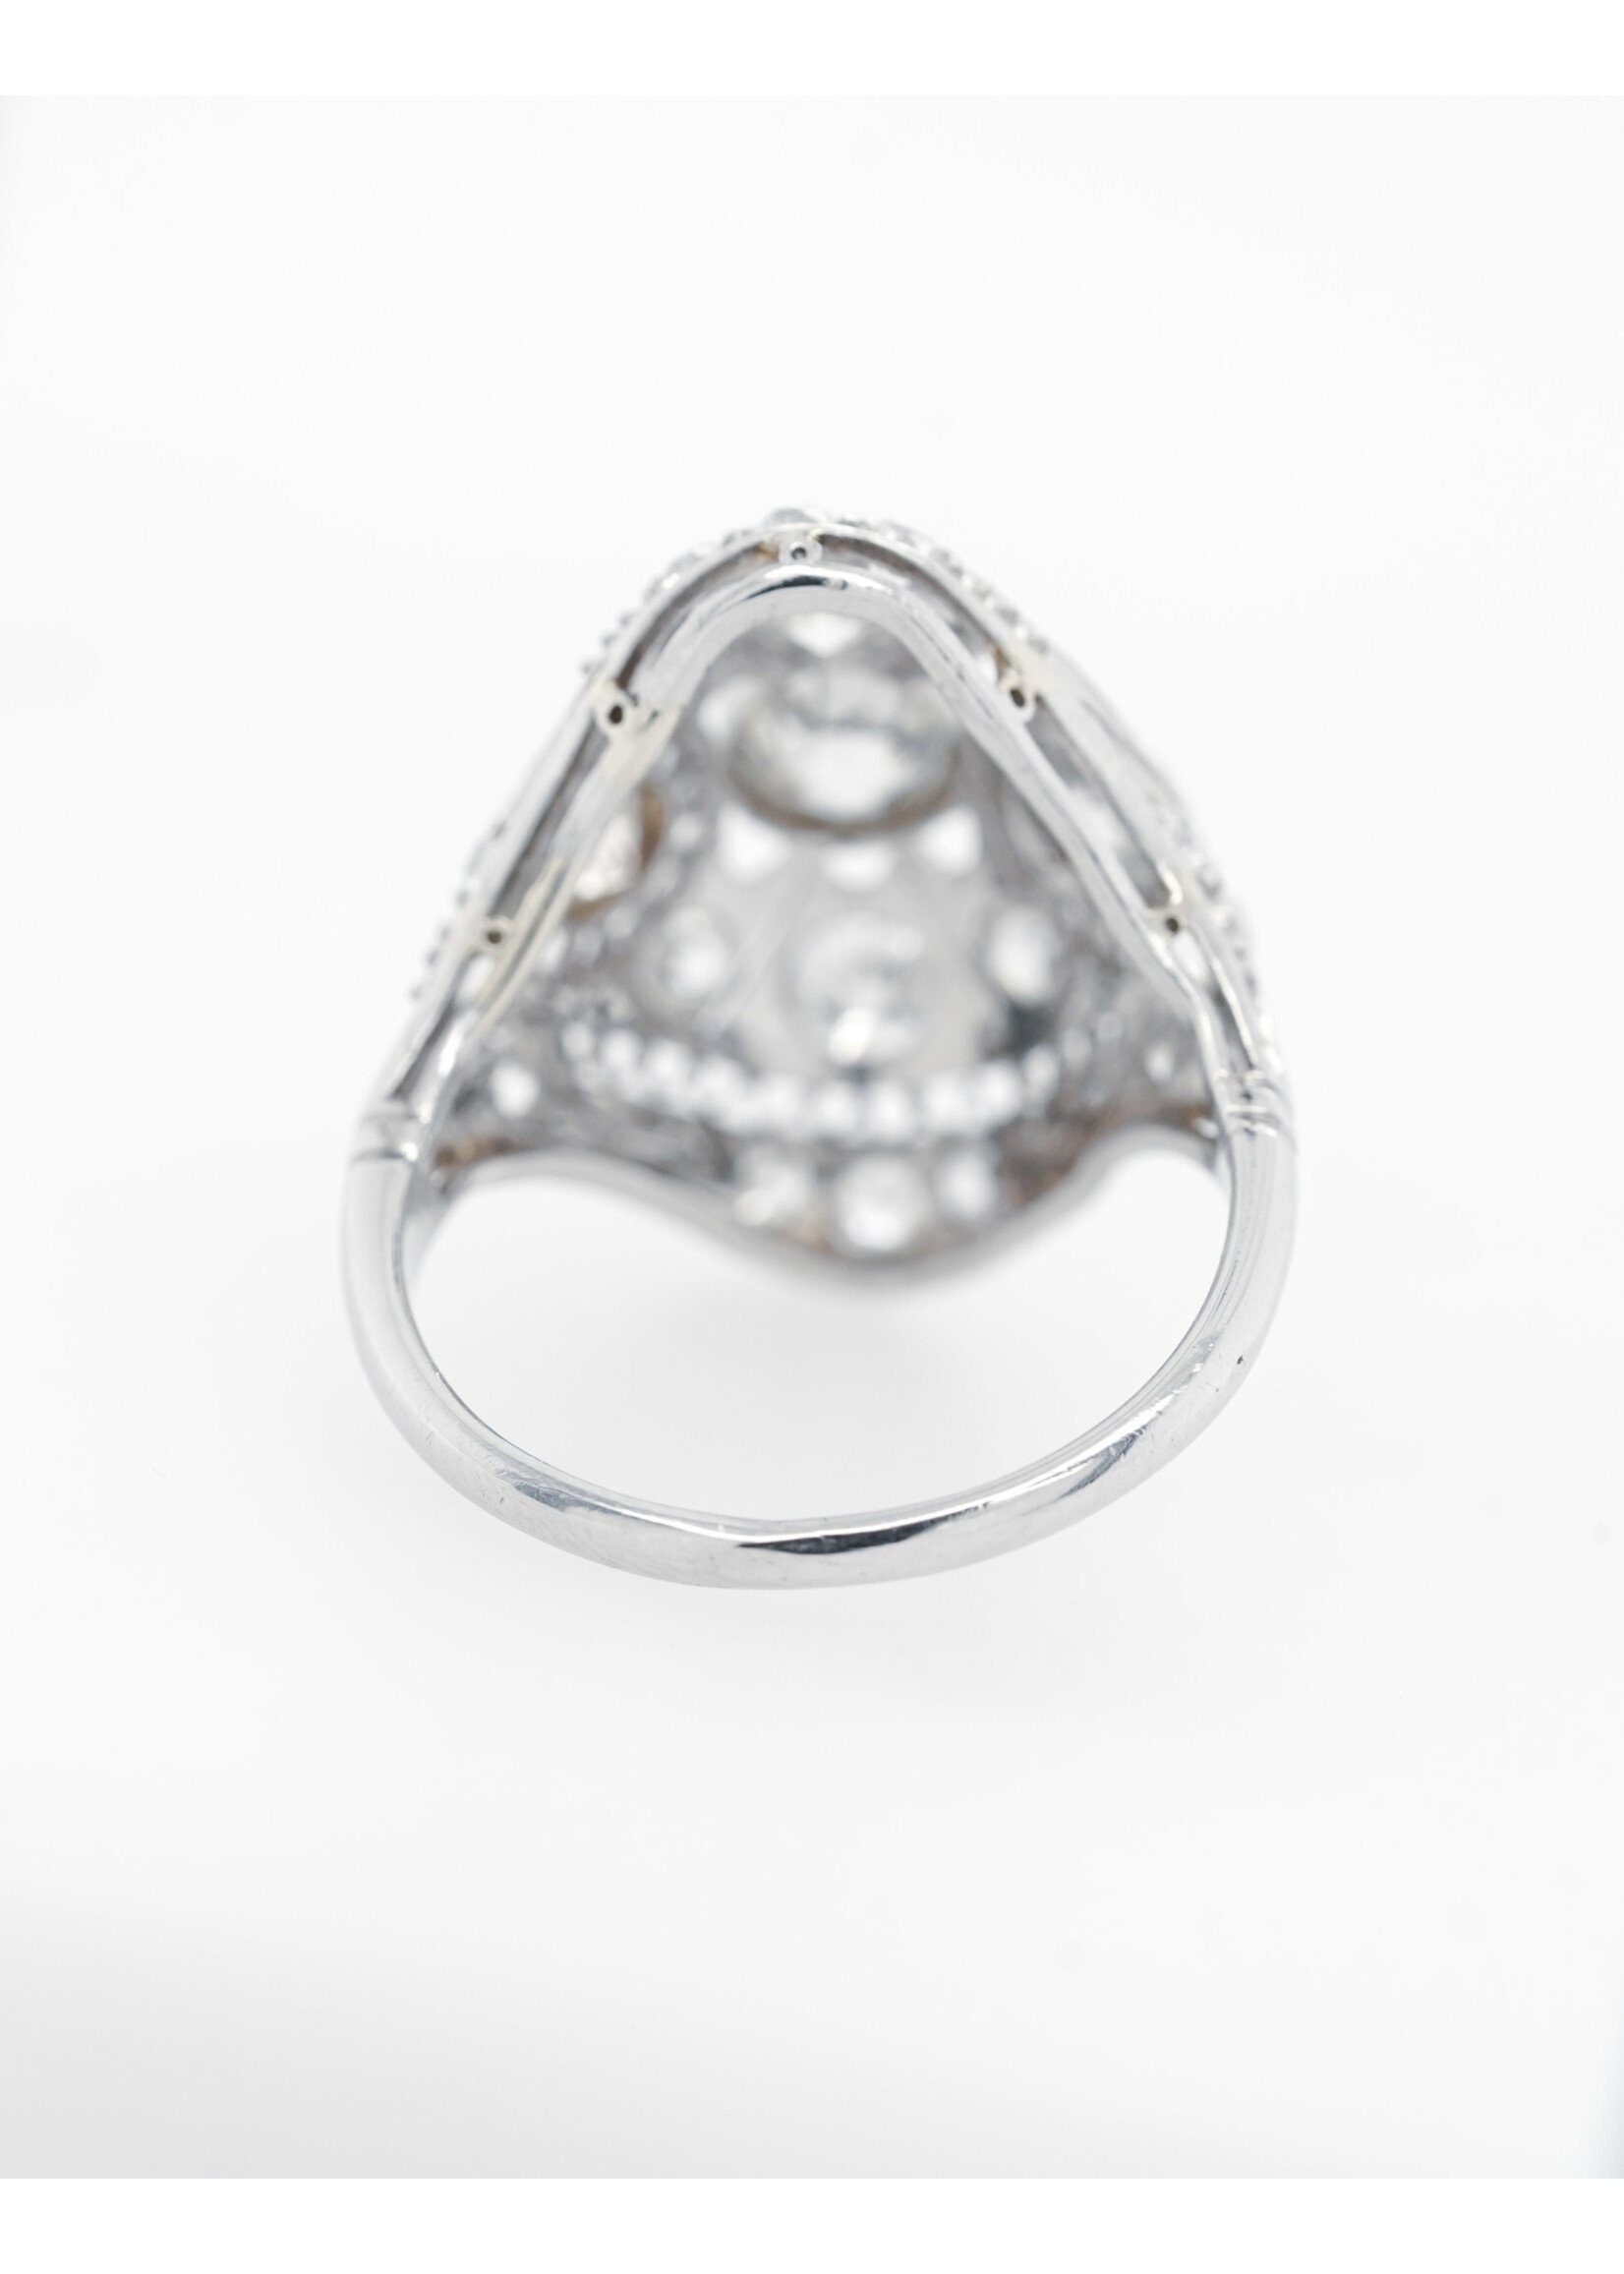 Platinum 5.47g 1.90ctw (5/8ctr) J/VS1 European Cut Diamond Vintage Ring (size 6.5)